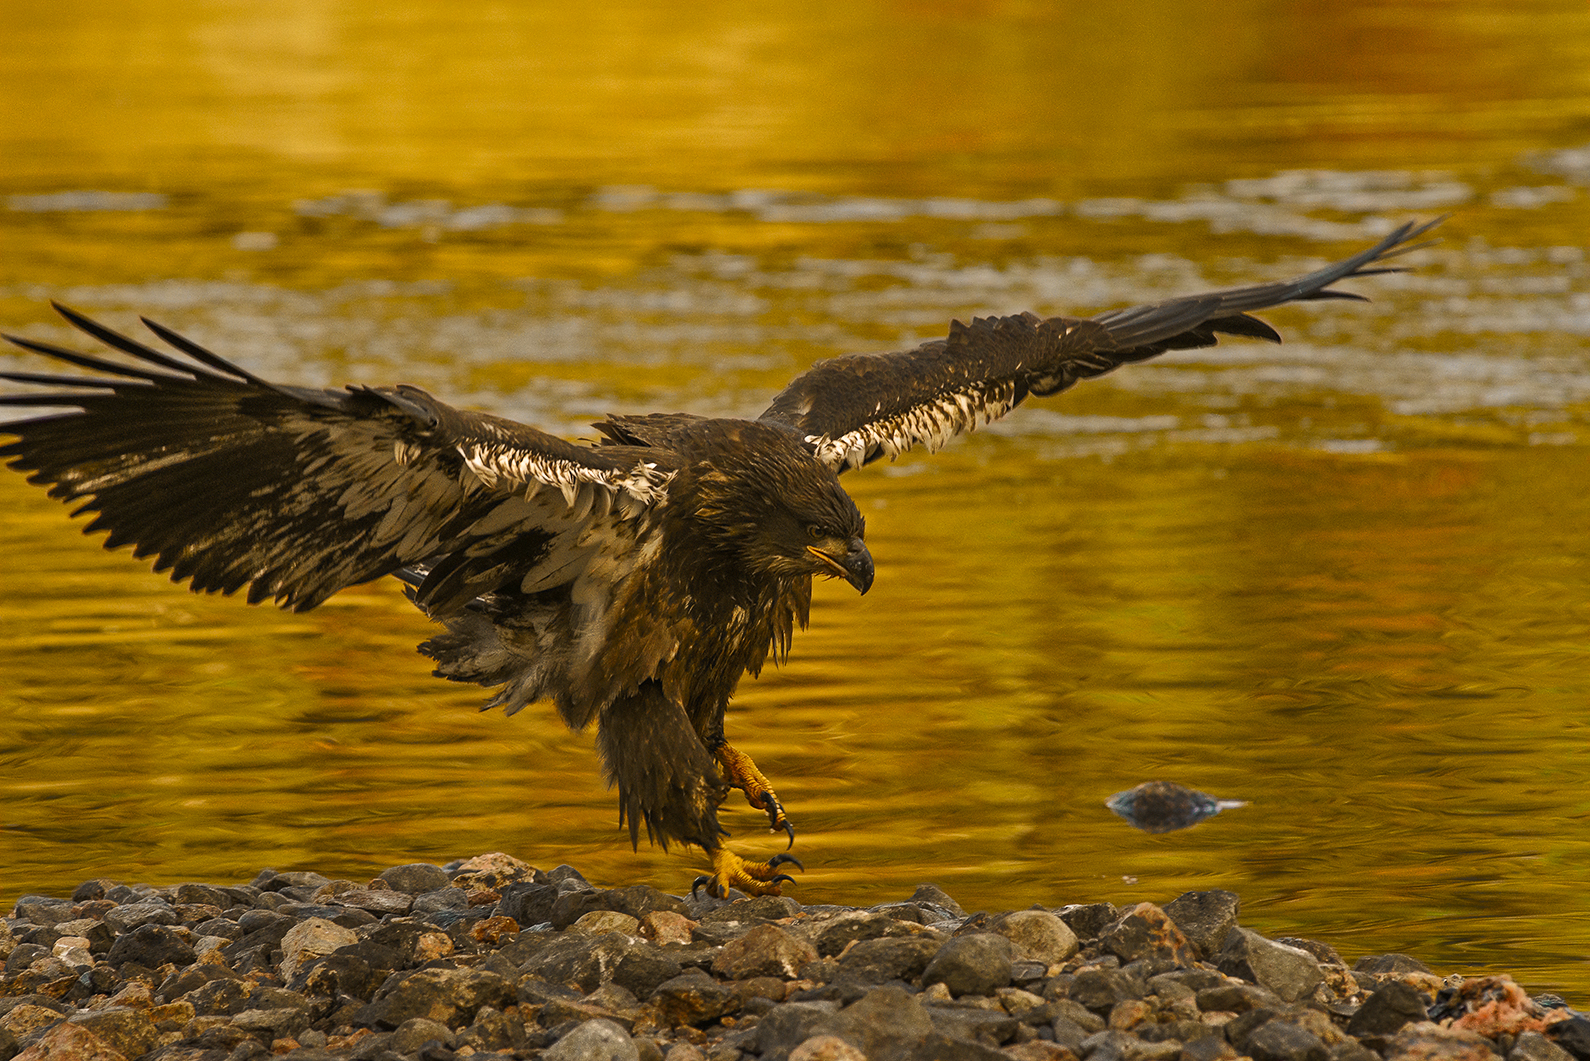 Juvenile bald eagle landing at sunset